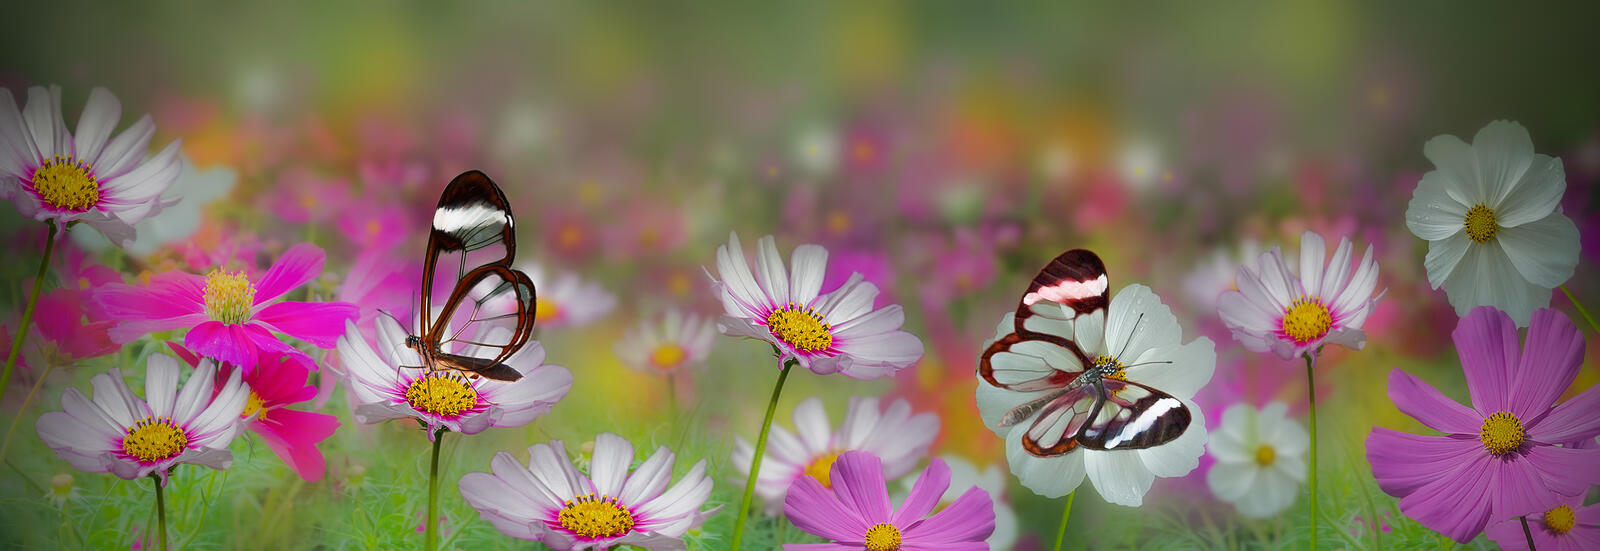 Wallpapers kosmeya butterflies flower on the desktop